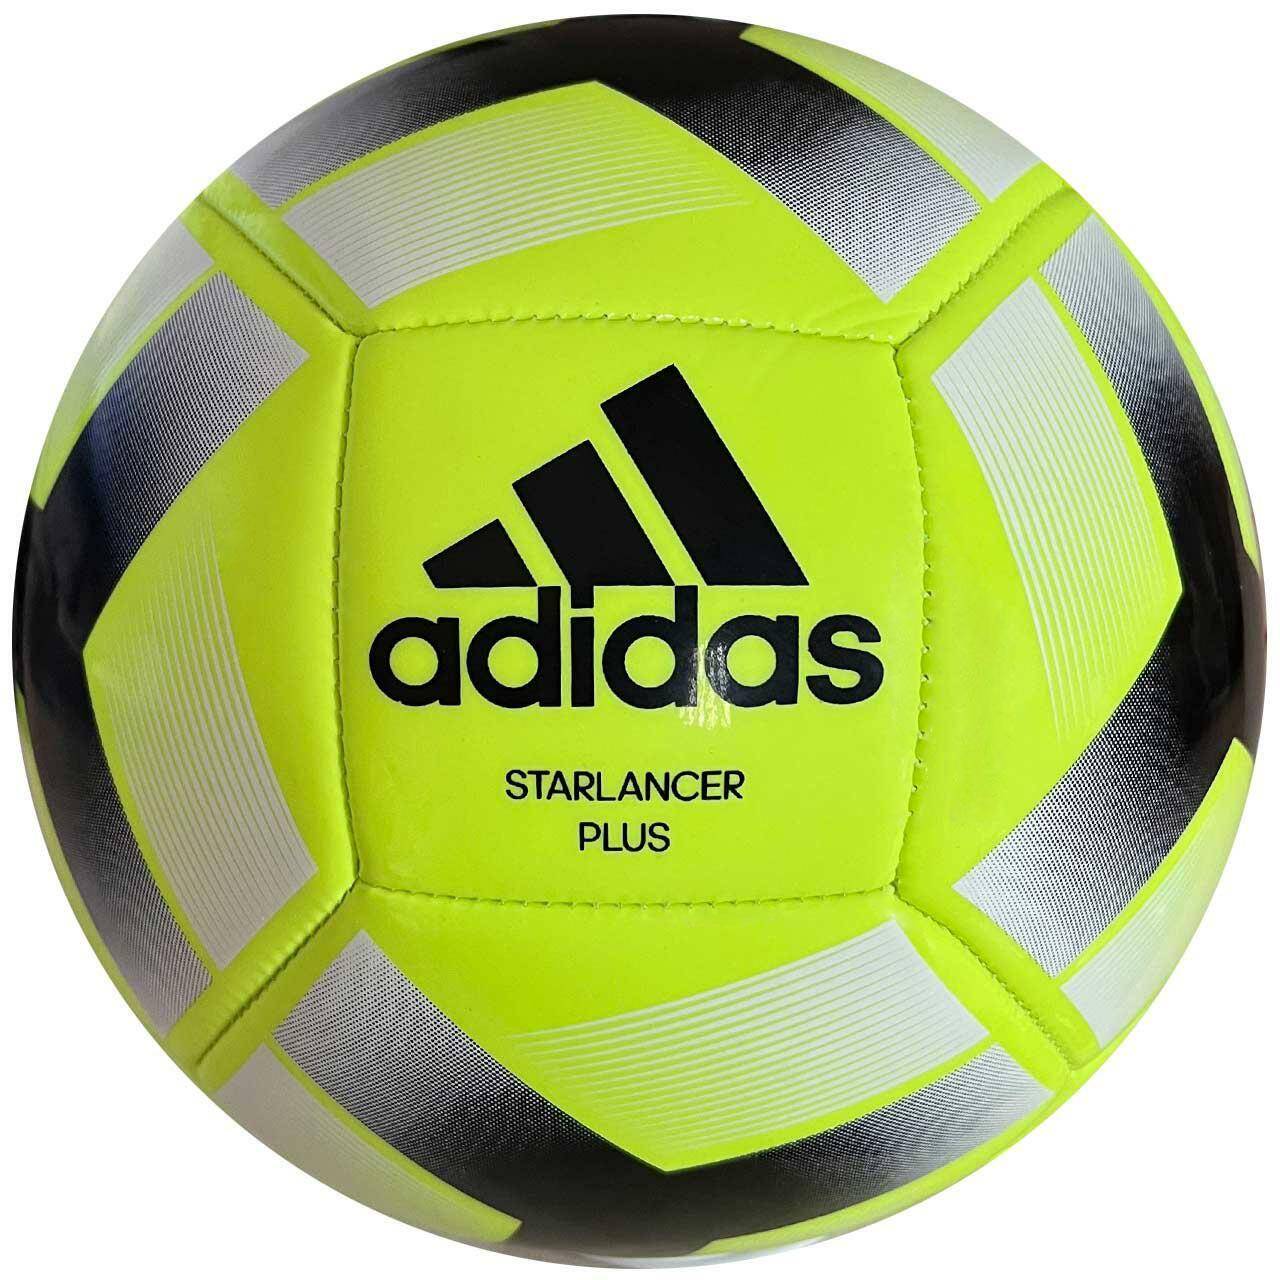 Adidas piłka nożna Starlancer Plus